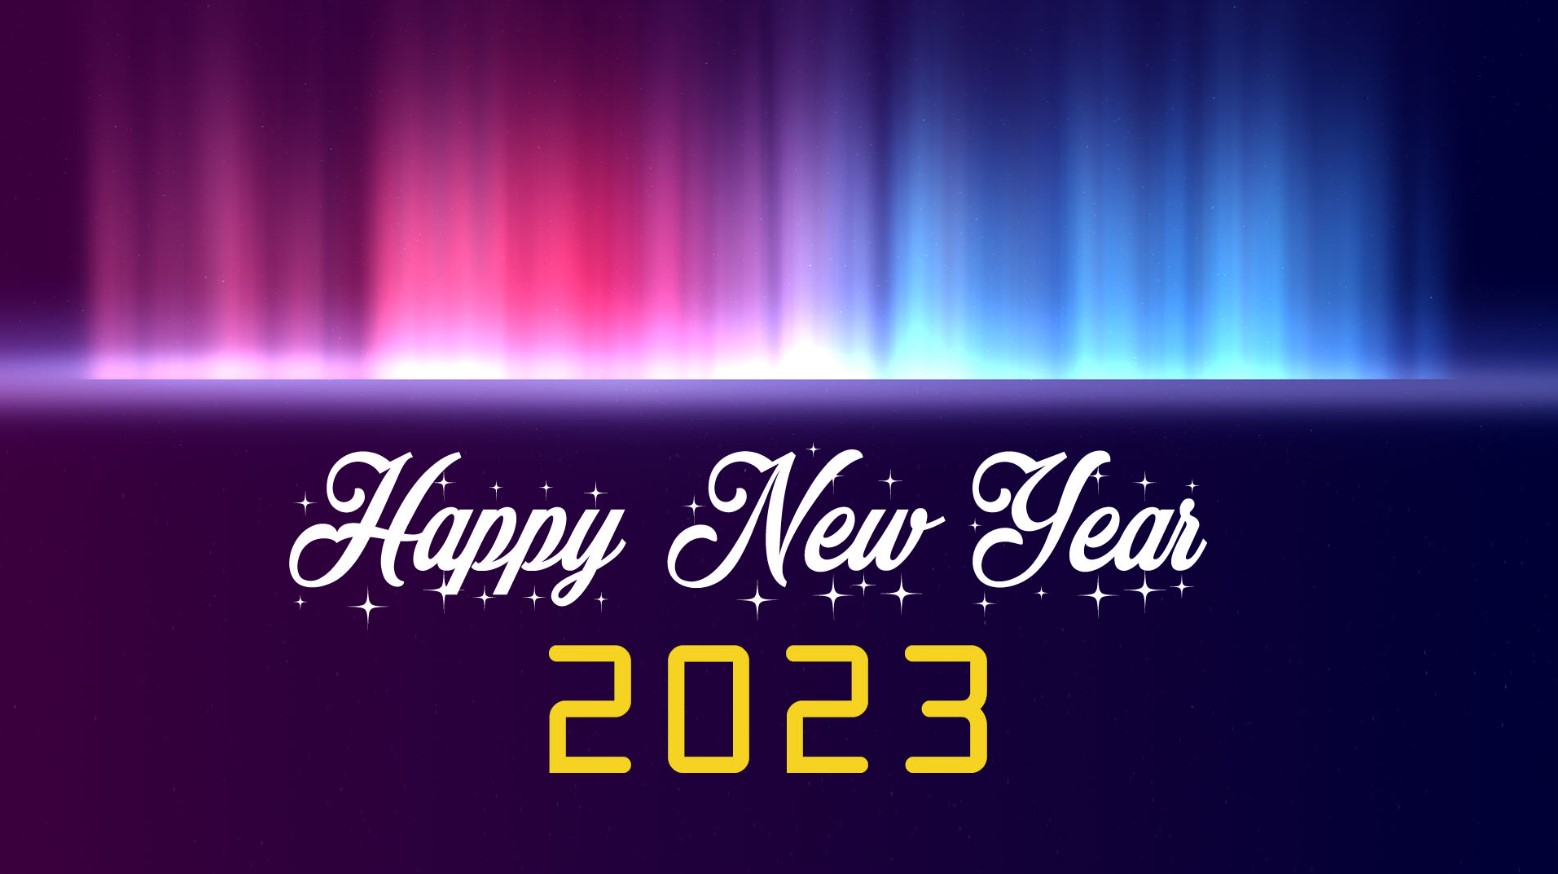 Happy New Year 2k23 Image